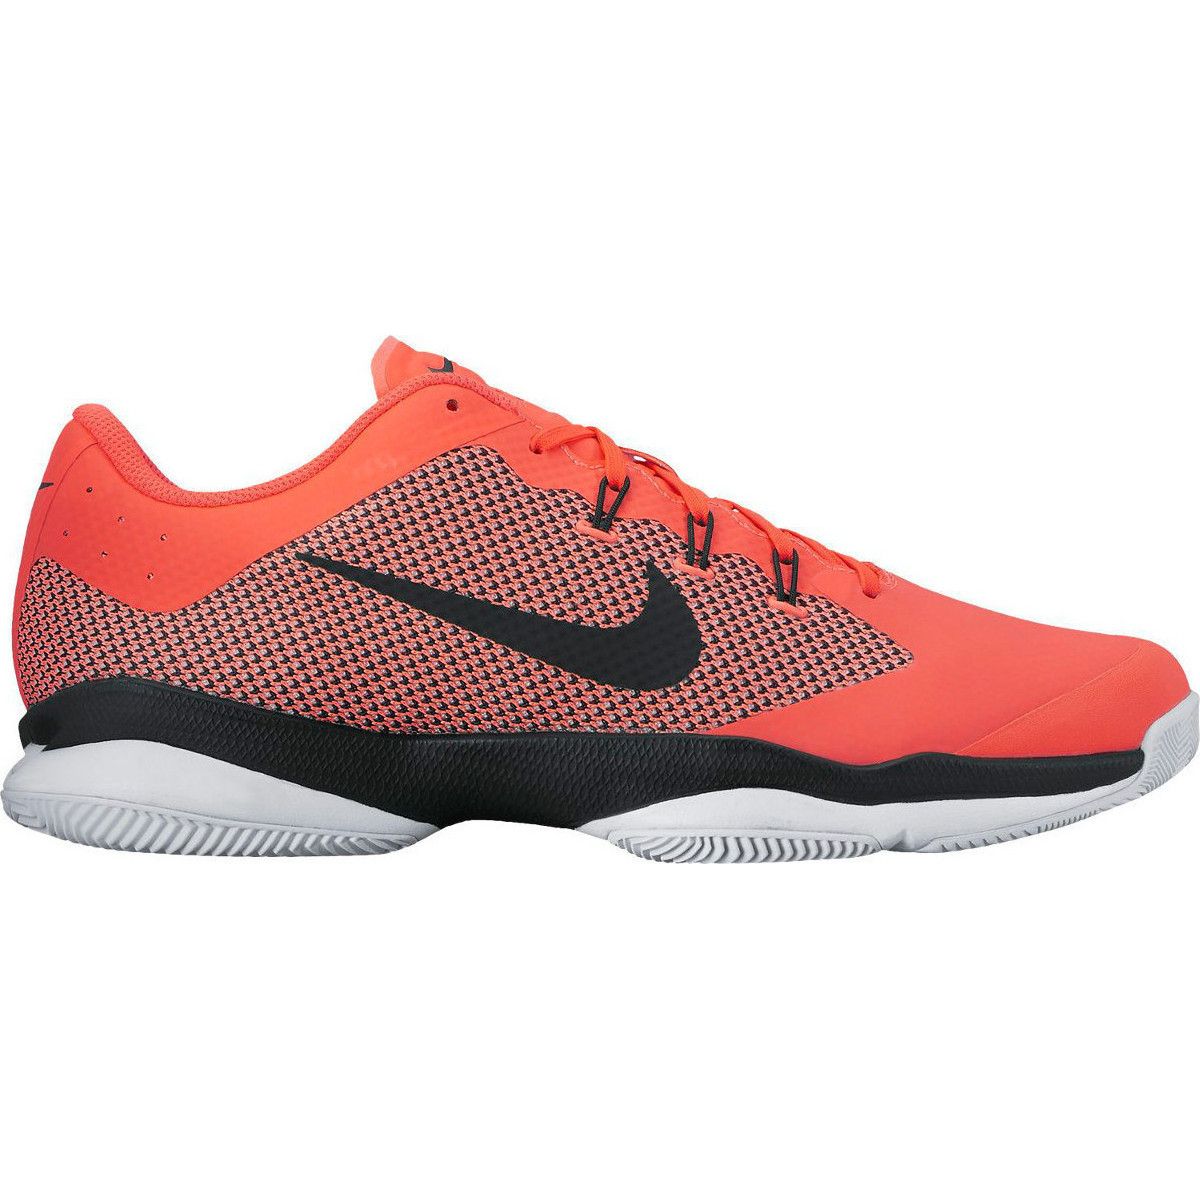 Nike Air Zoom Ultra Men's Tennis Shoes 845007-801